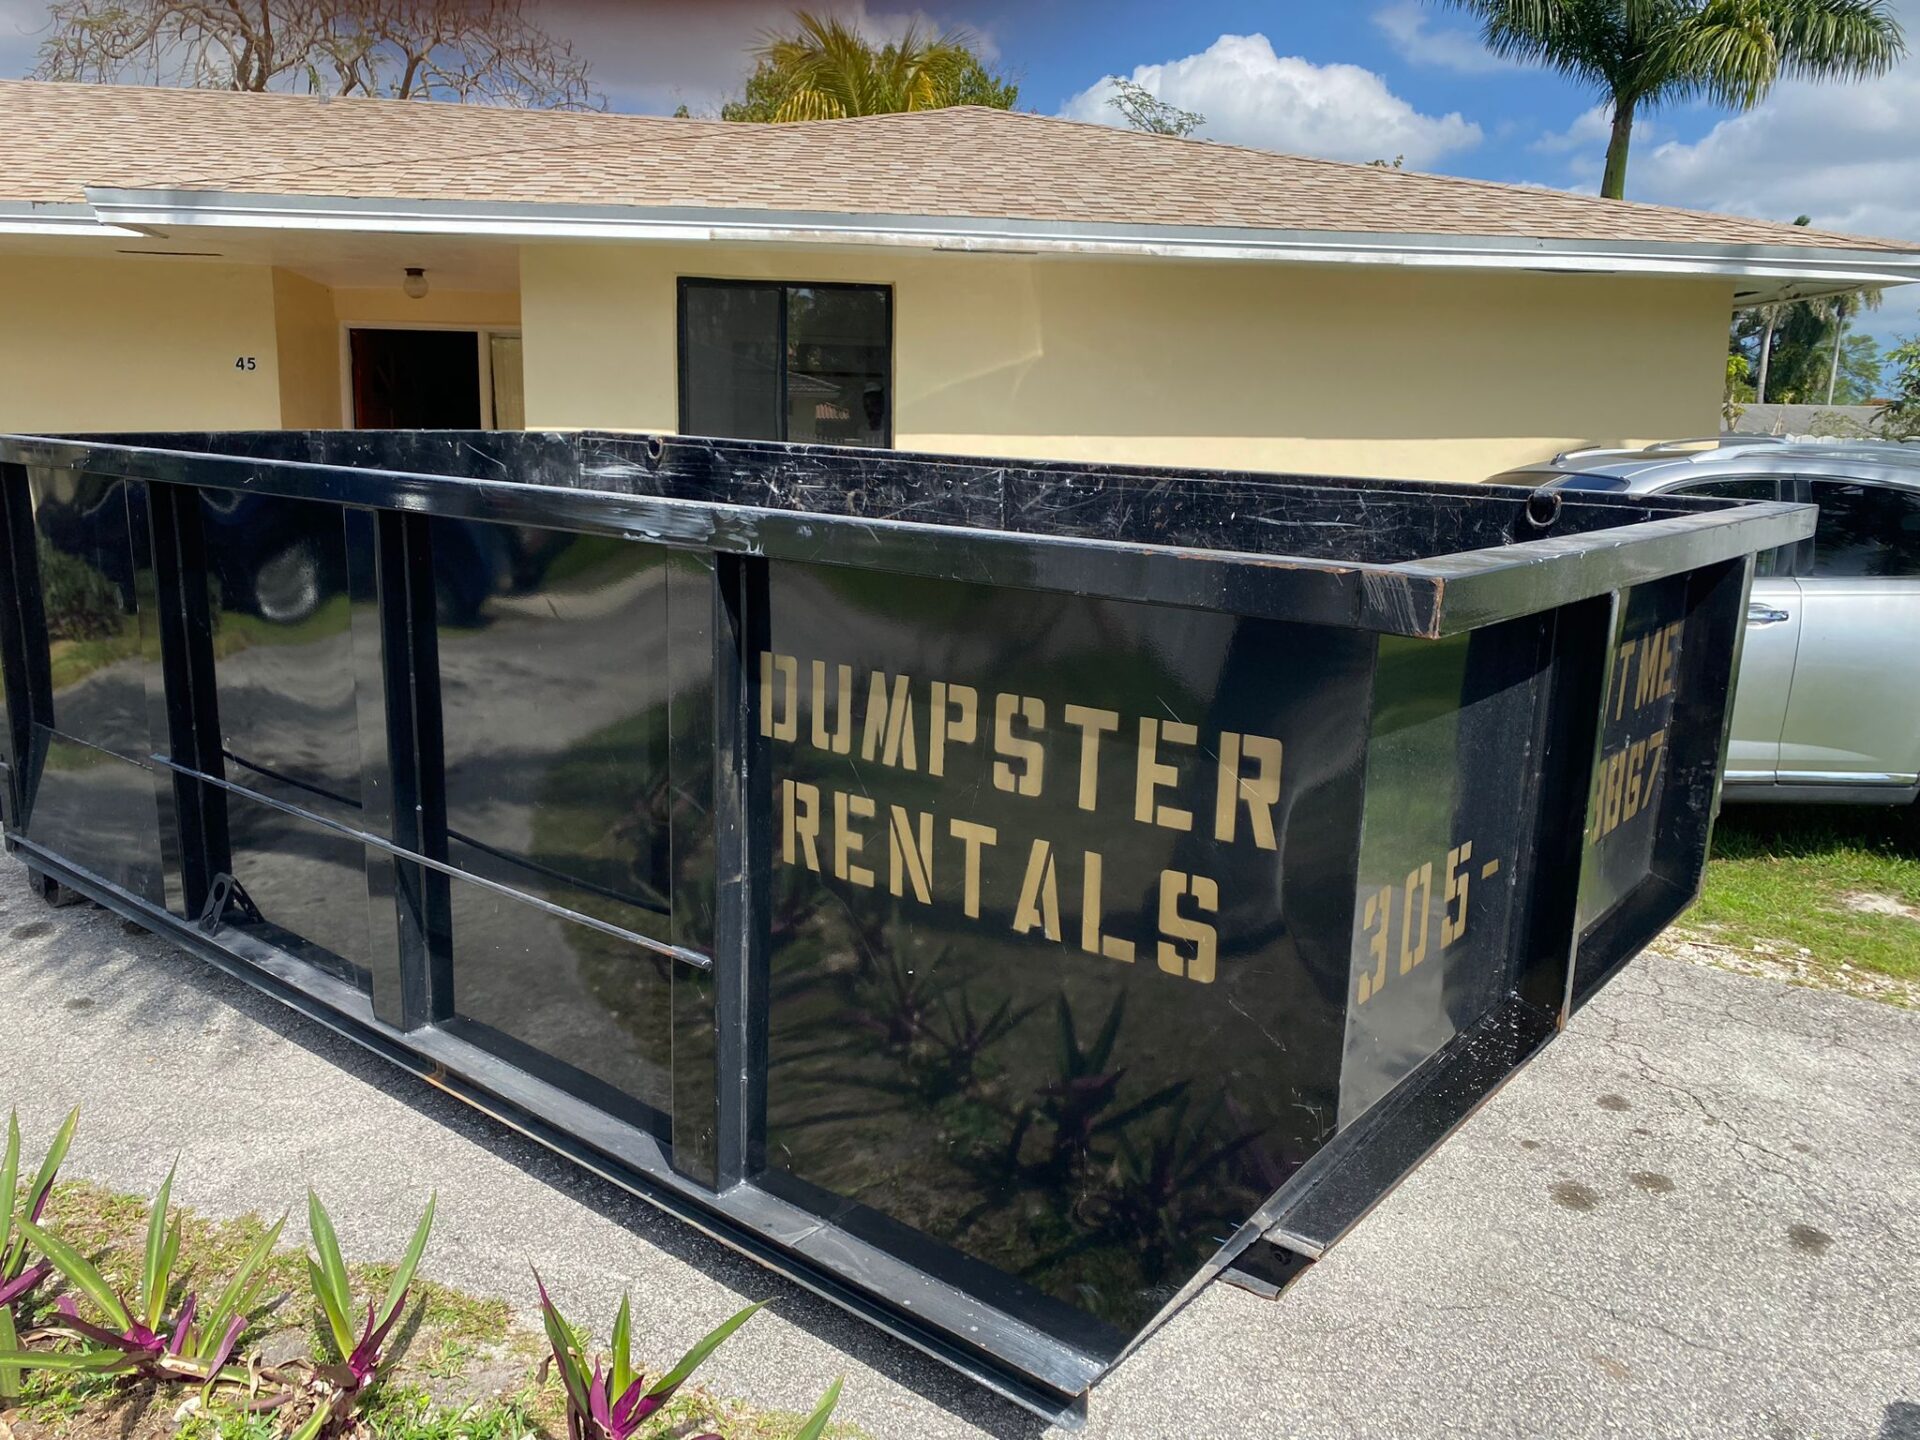 Dumpster rental in Miami